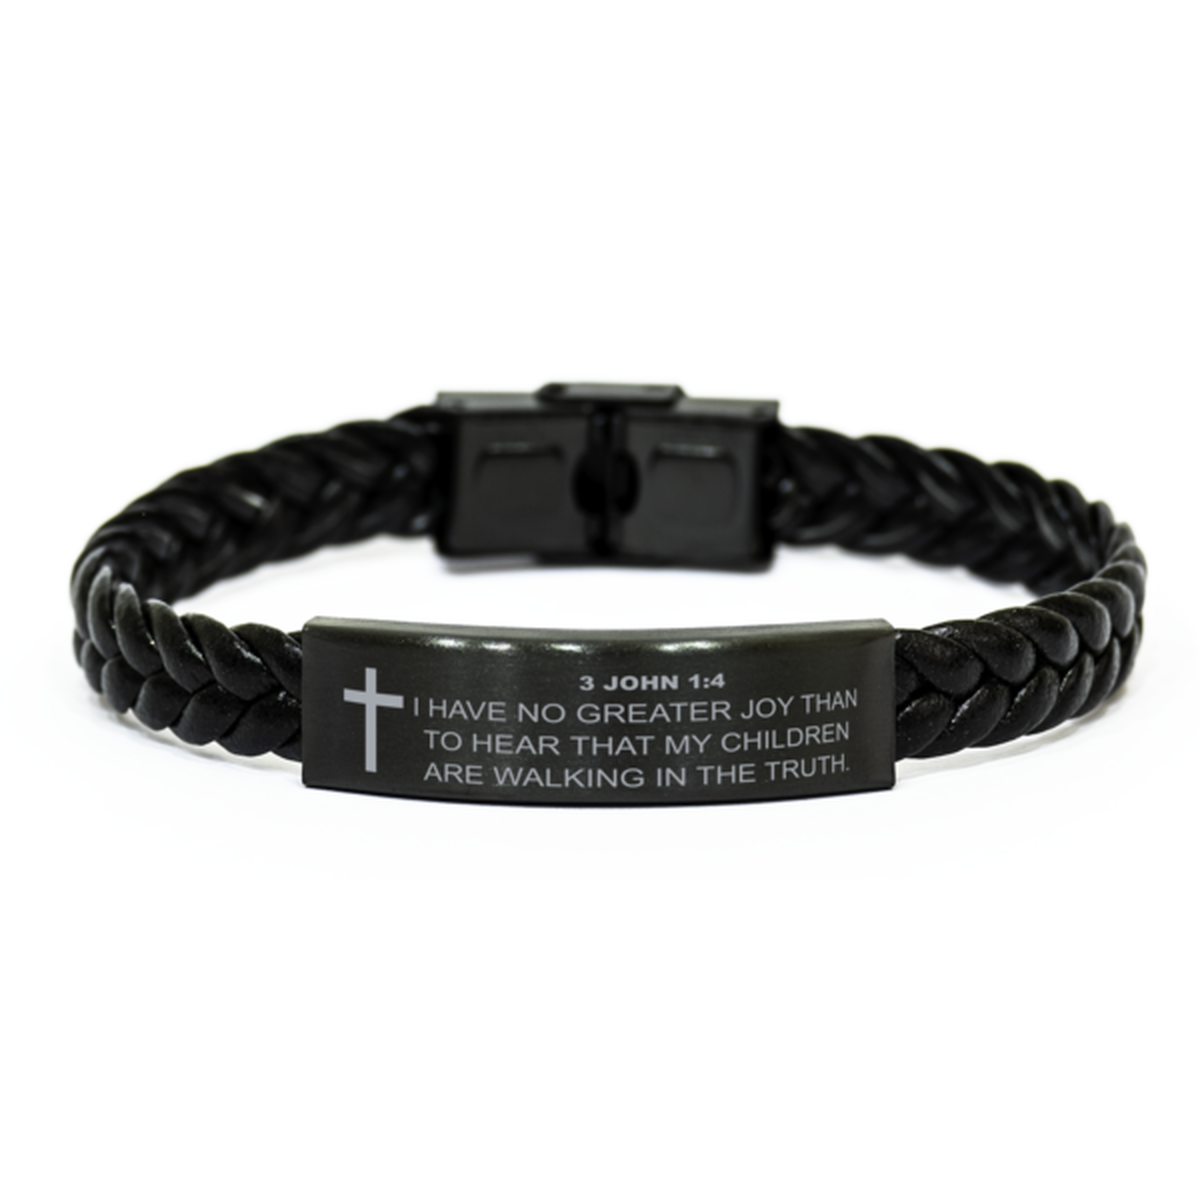 3 John 1:4 Bracelet, I Have No Greater Joy, Bible Verse Bracelet, Christian Bracelet, Braided Leather Bracelet, Easter Gift